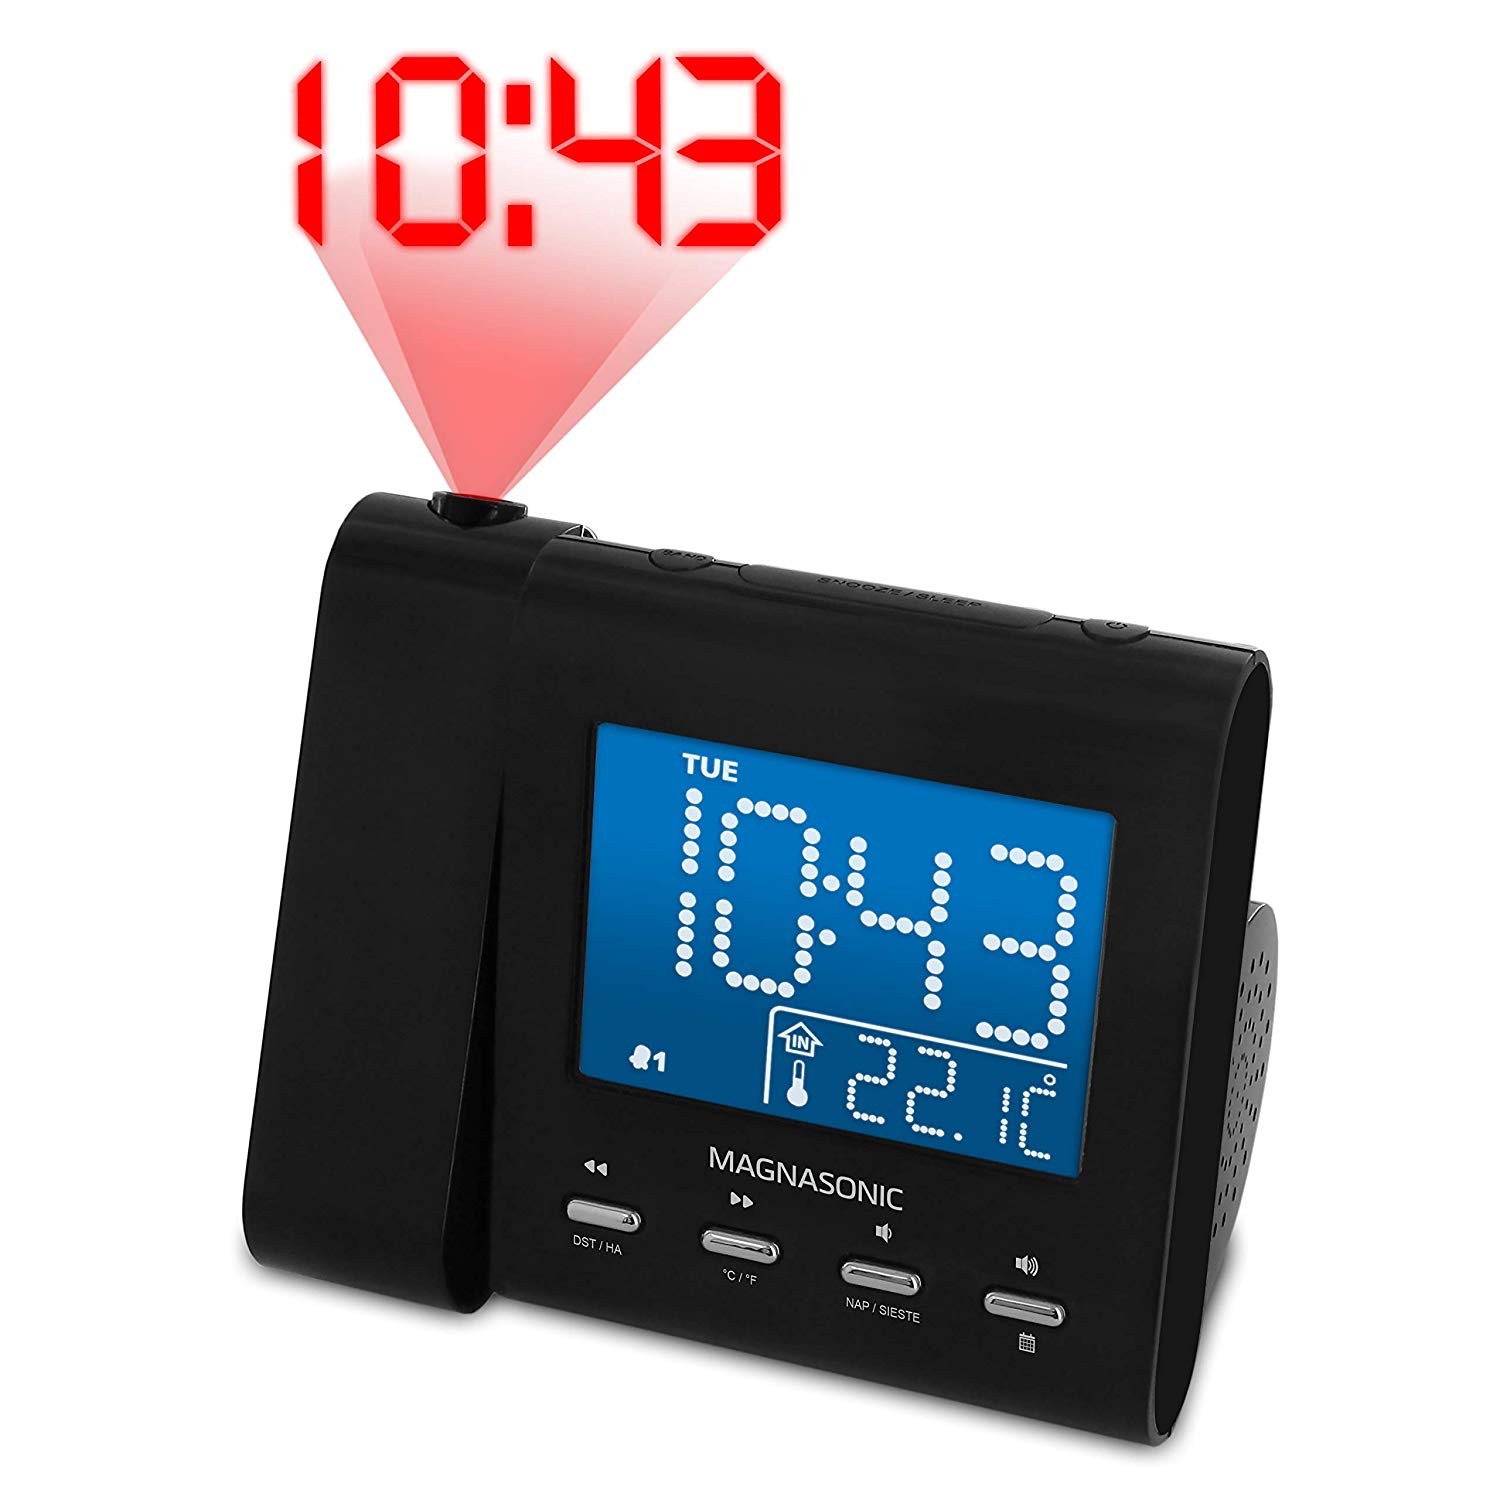 Magnasonic Modern Projection Alarm Clock Radio